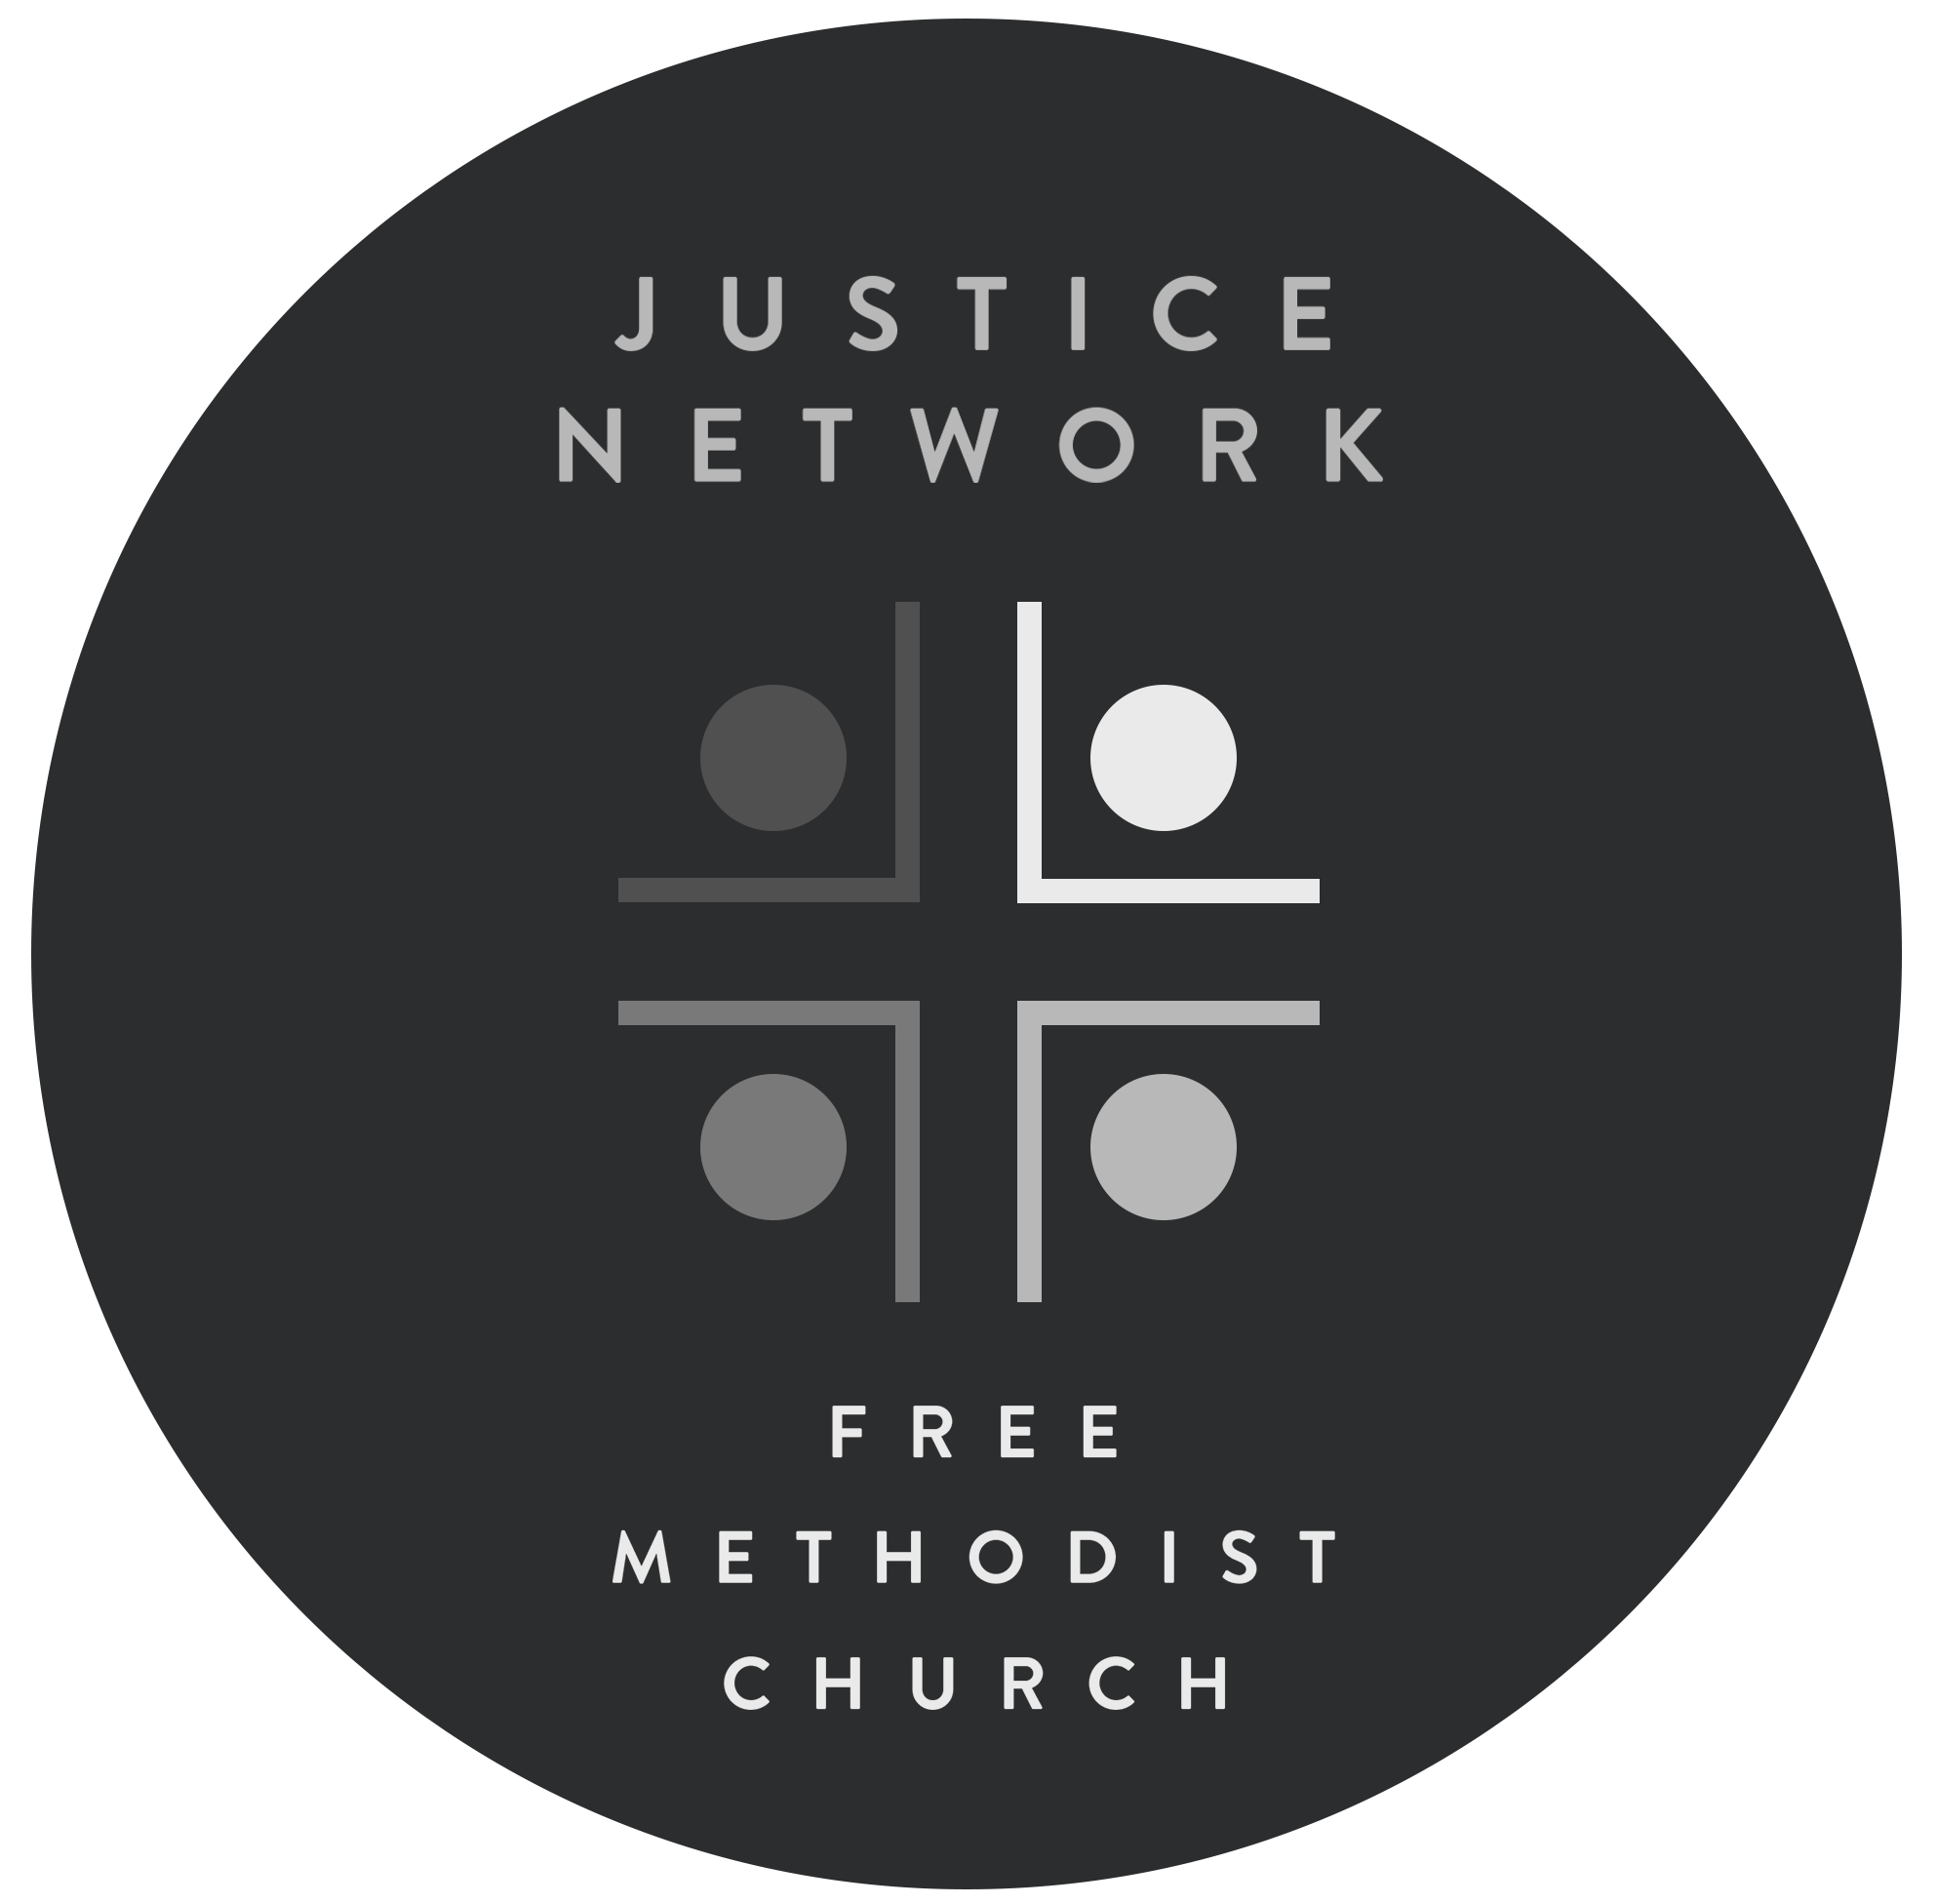 Justice Network Free Methodist Church